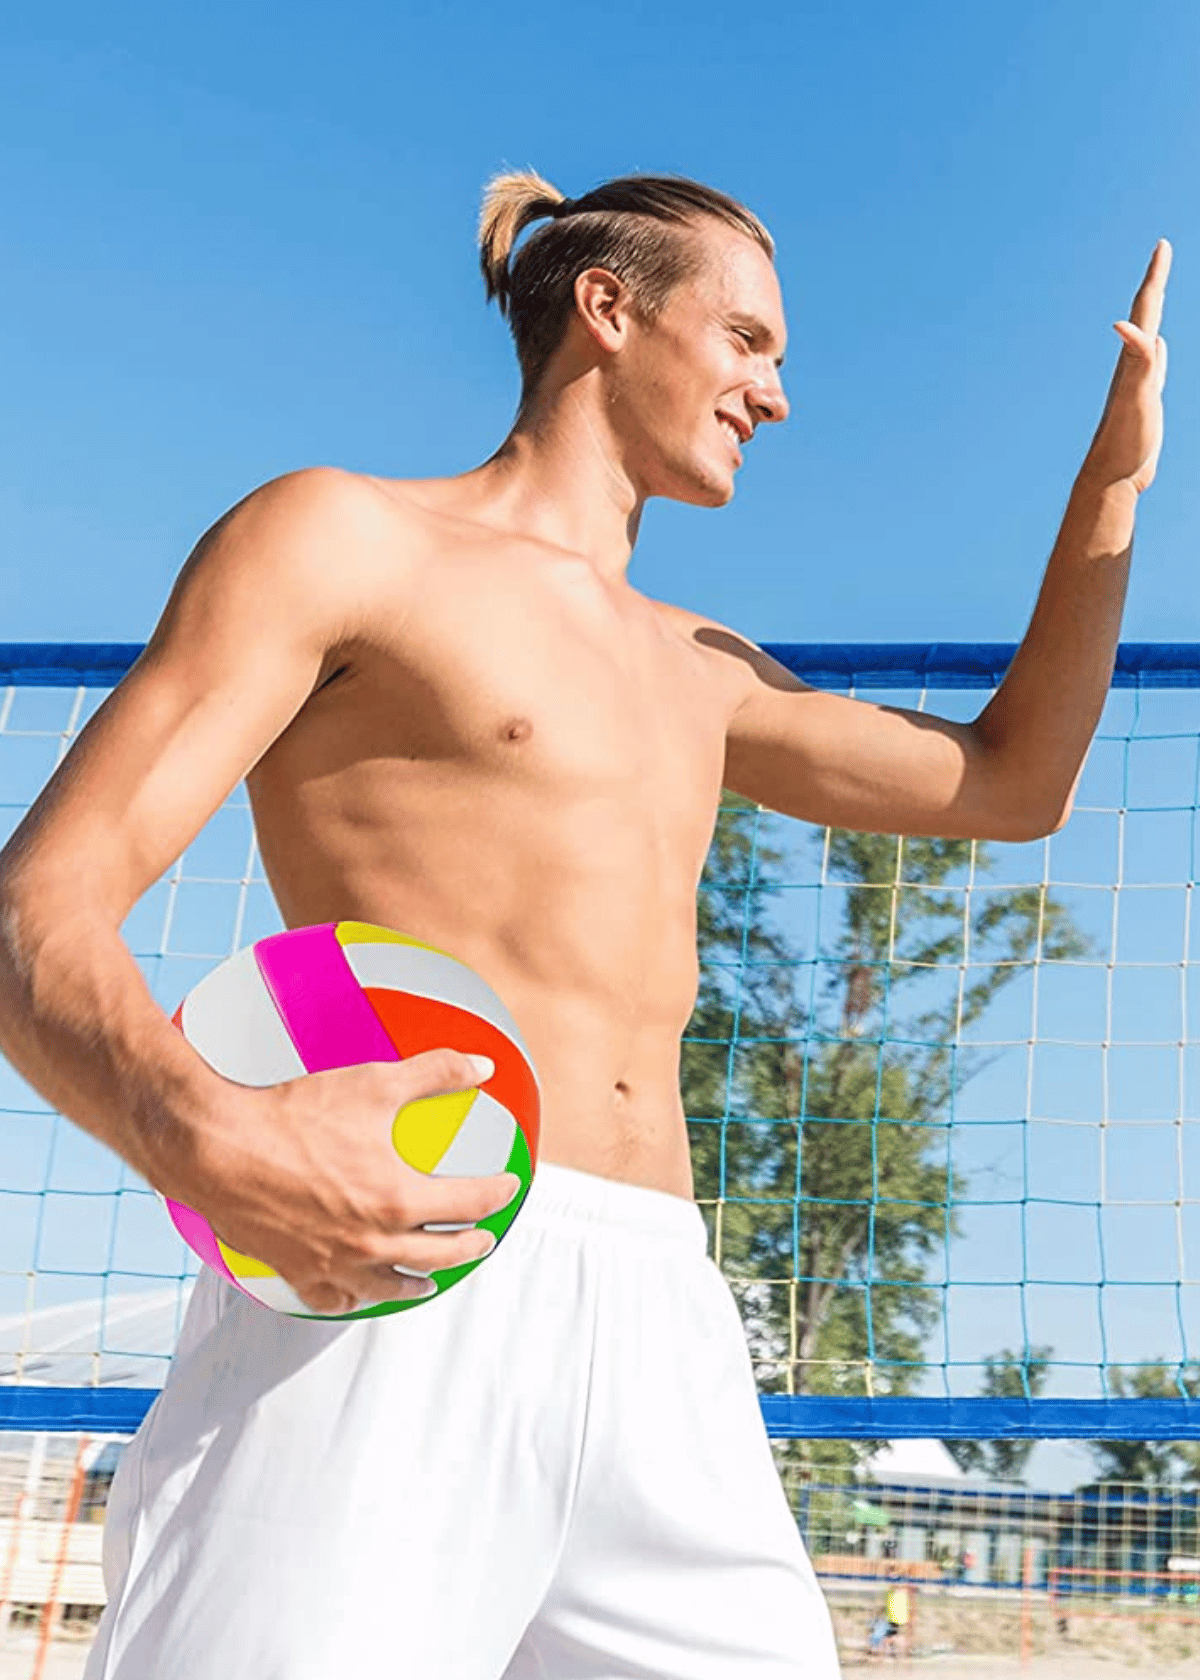 Best Outdoor Volleyball Ball:  A Buyer's Guide